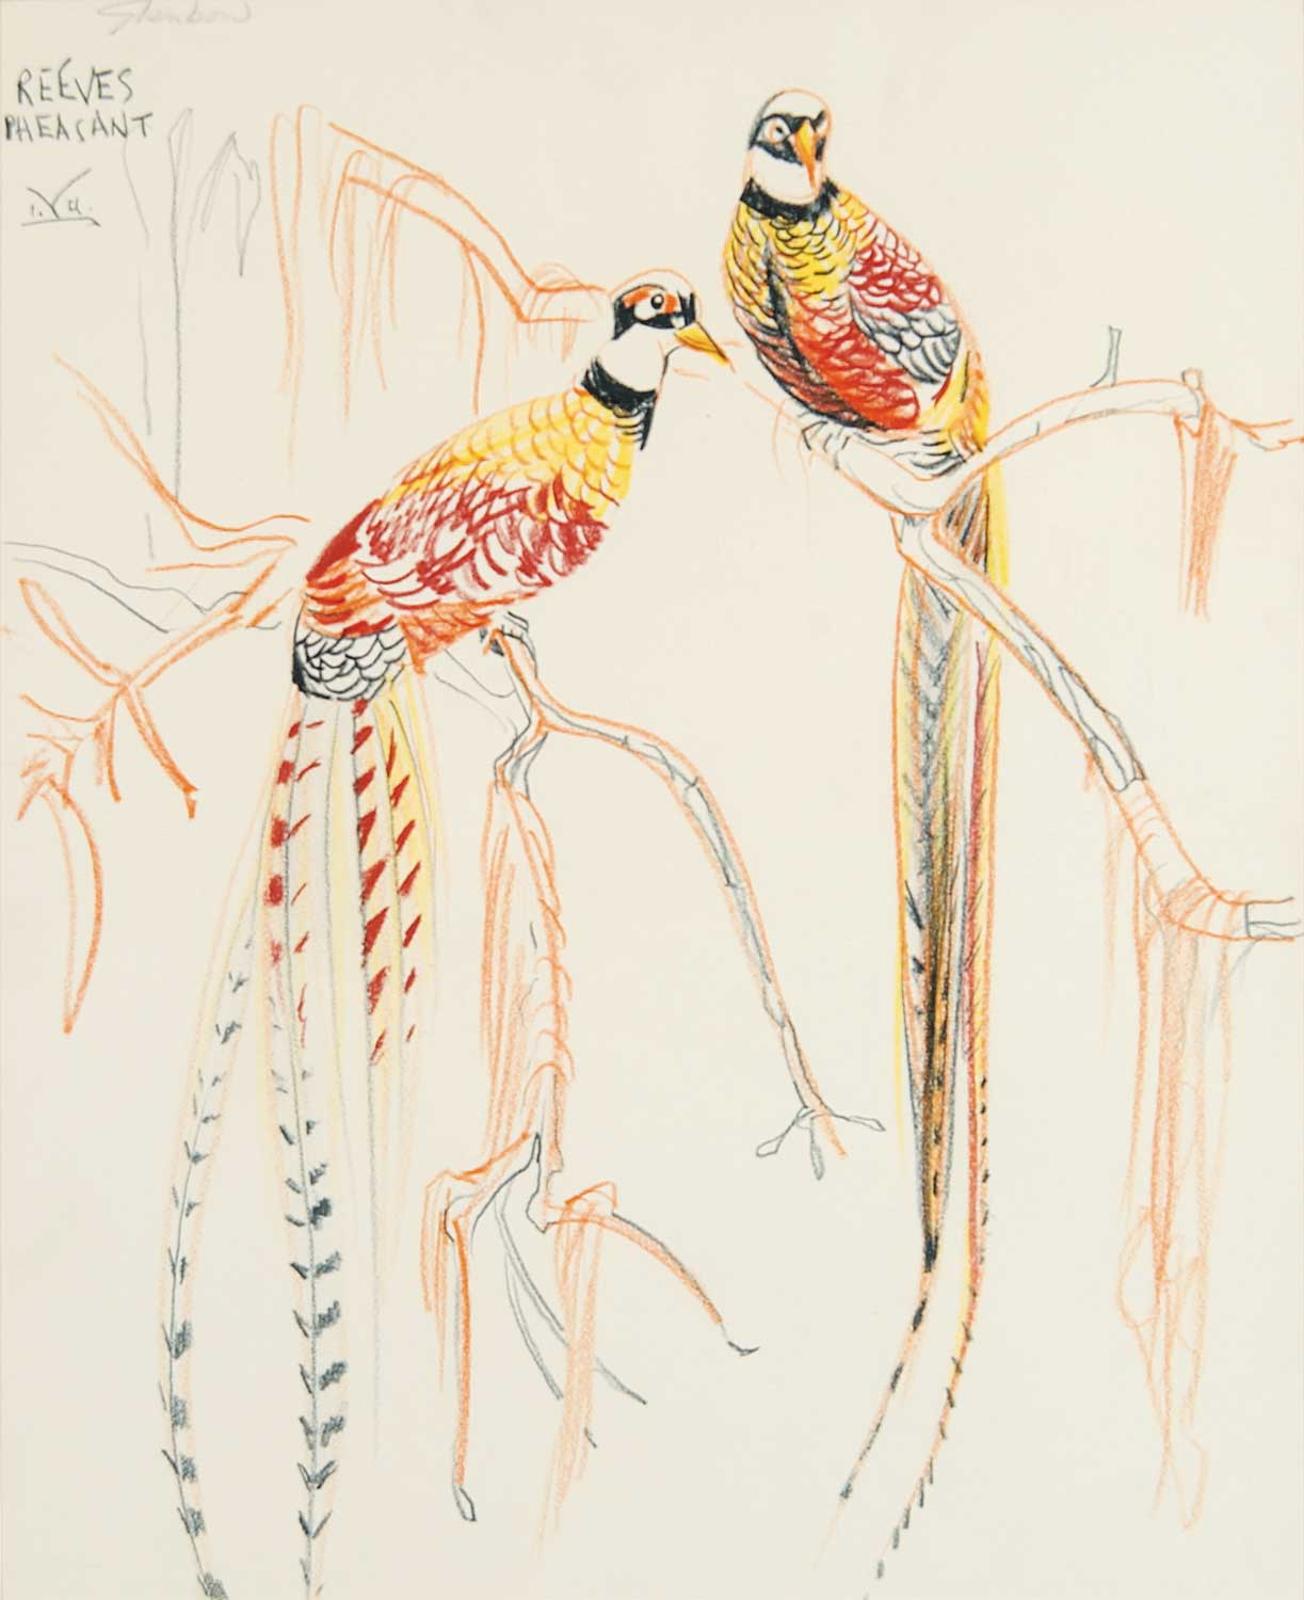 Illingworth Holey (Buck) Kerr (1905-1989) - Reeves Pheasant